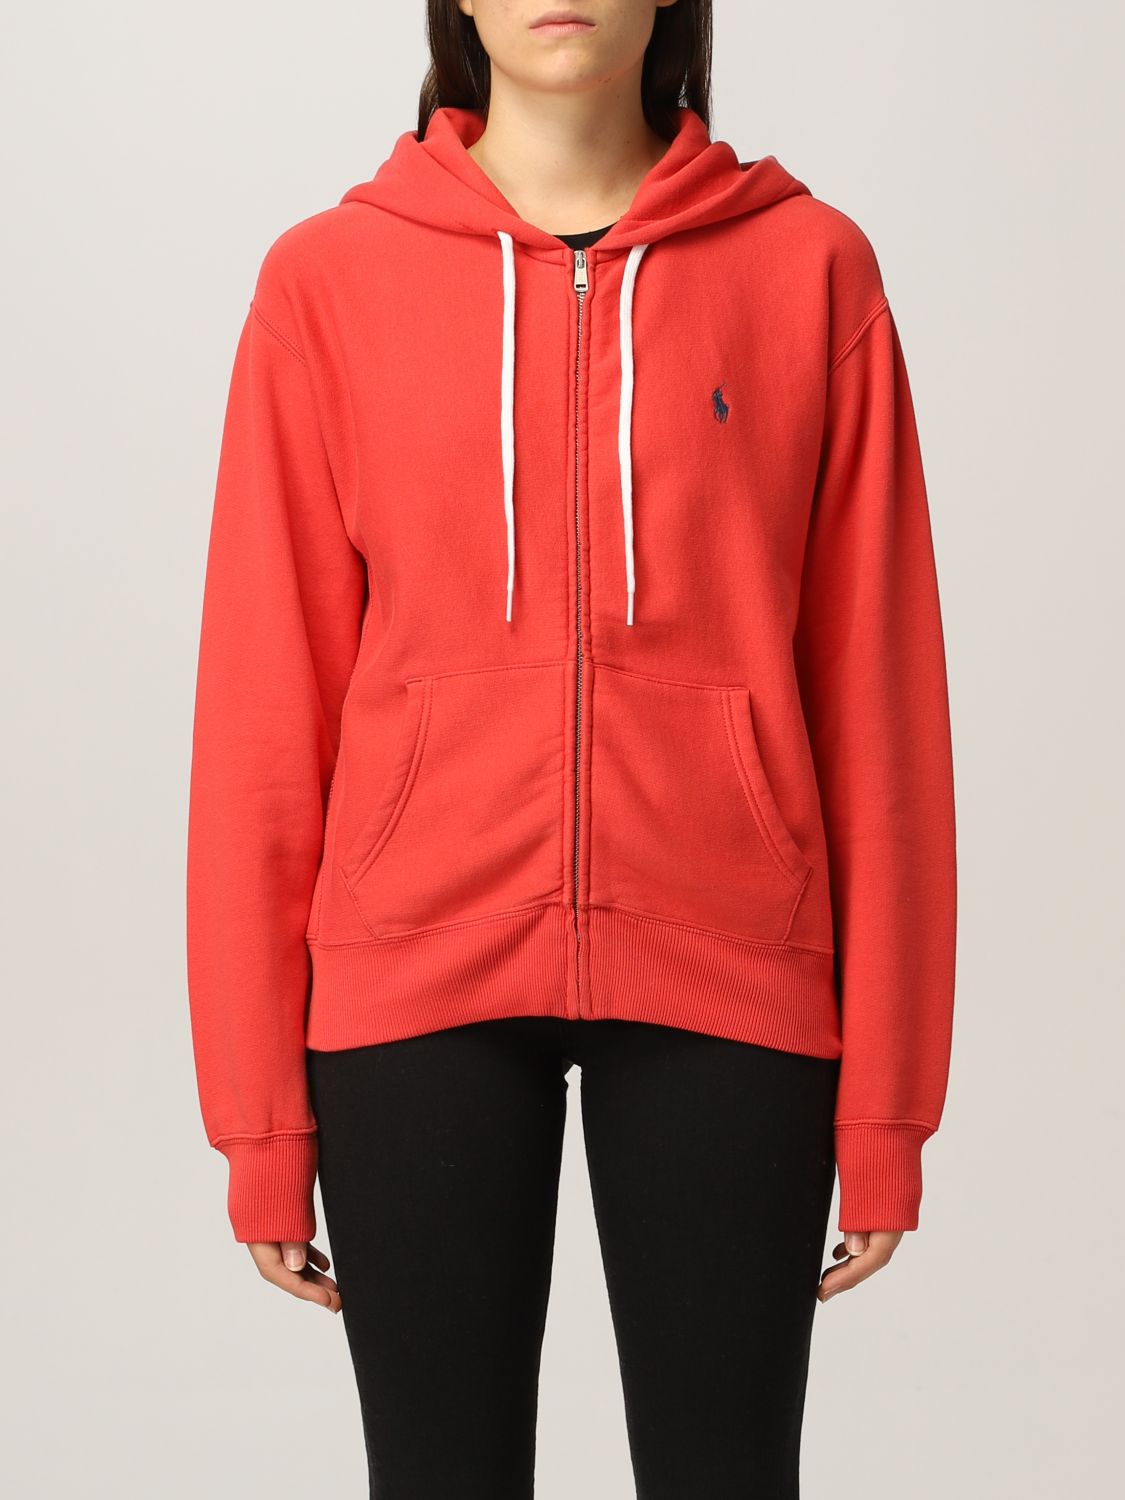 POLO RALPH LAUREN: sweatshirt with logo - Red | Polo Ralph Lauren sweatshirt  211794396 online on 